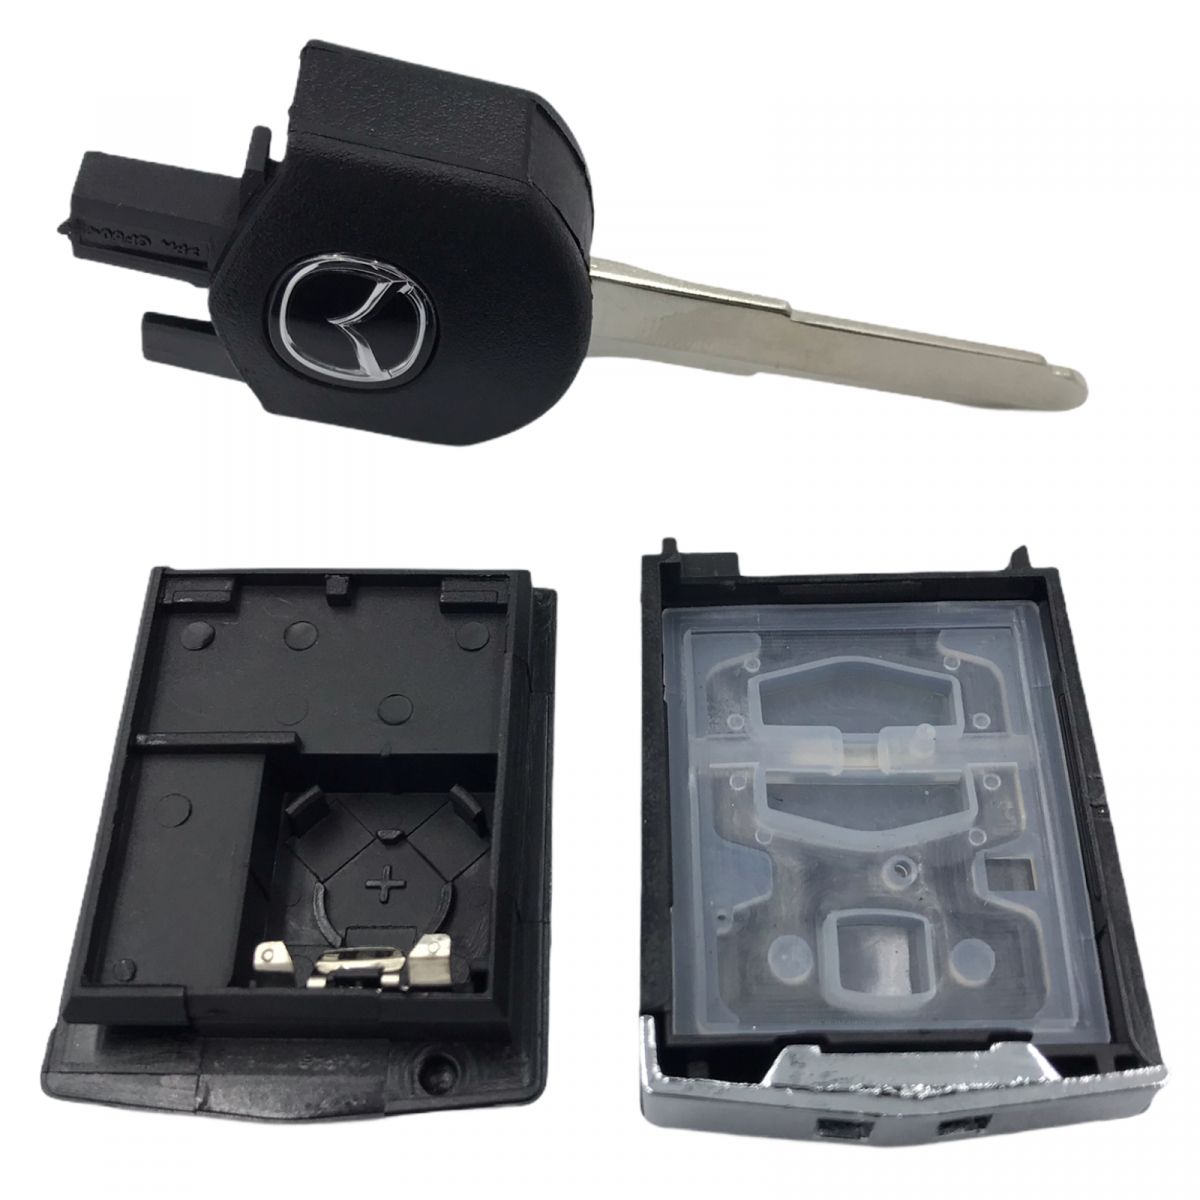 Корпус ключа Mazda 3 5 6 CX-7 2 кнопки